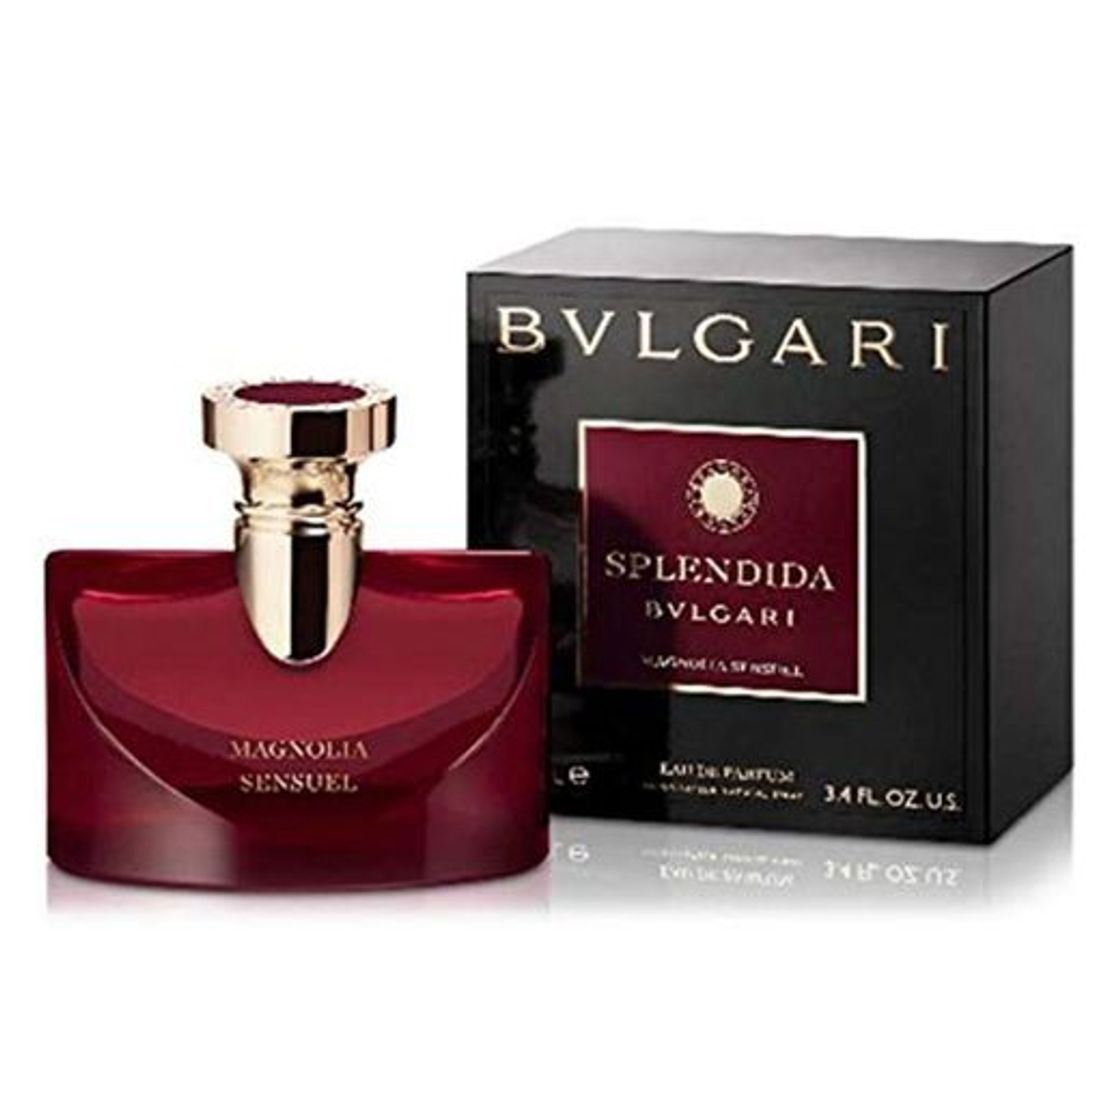 Bvlgari Splendida Magnolia Sensuel Eau de Perfuma